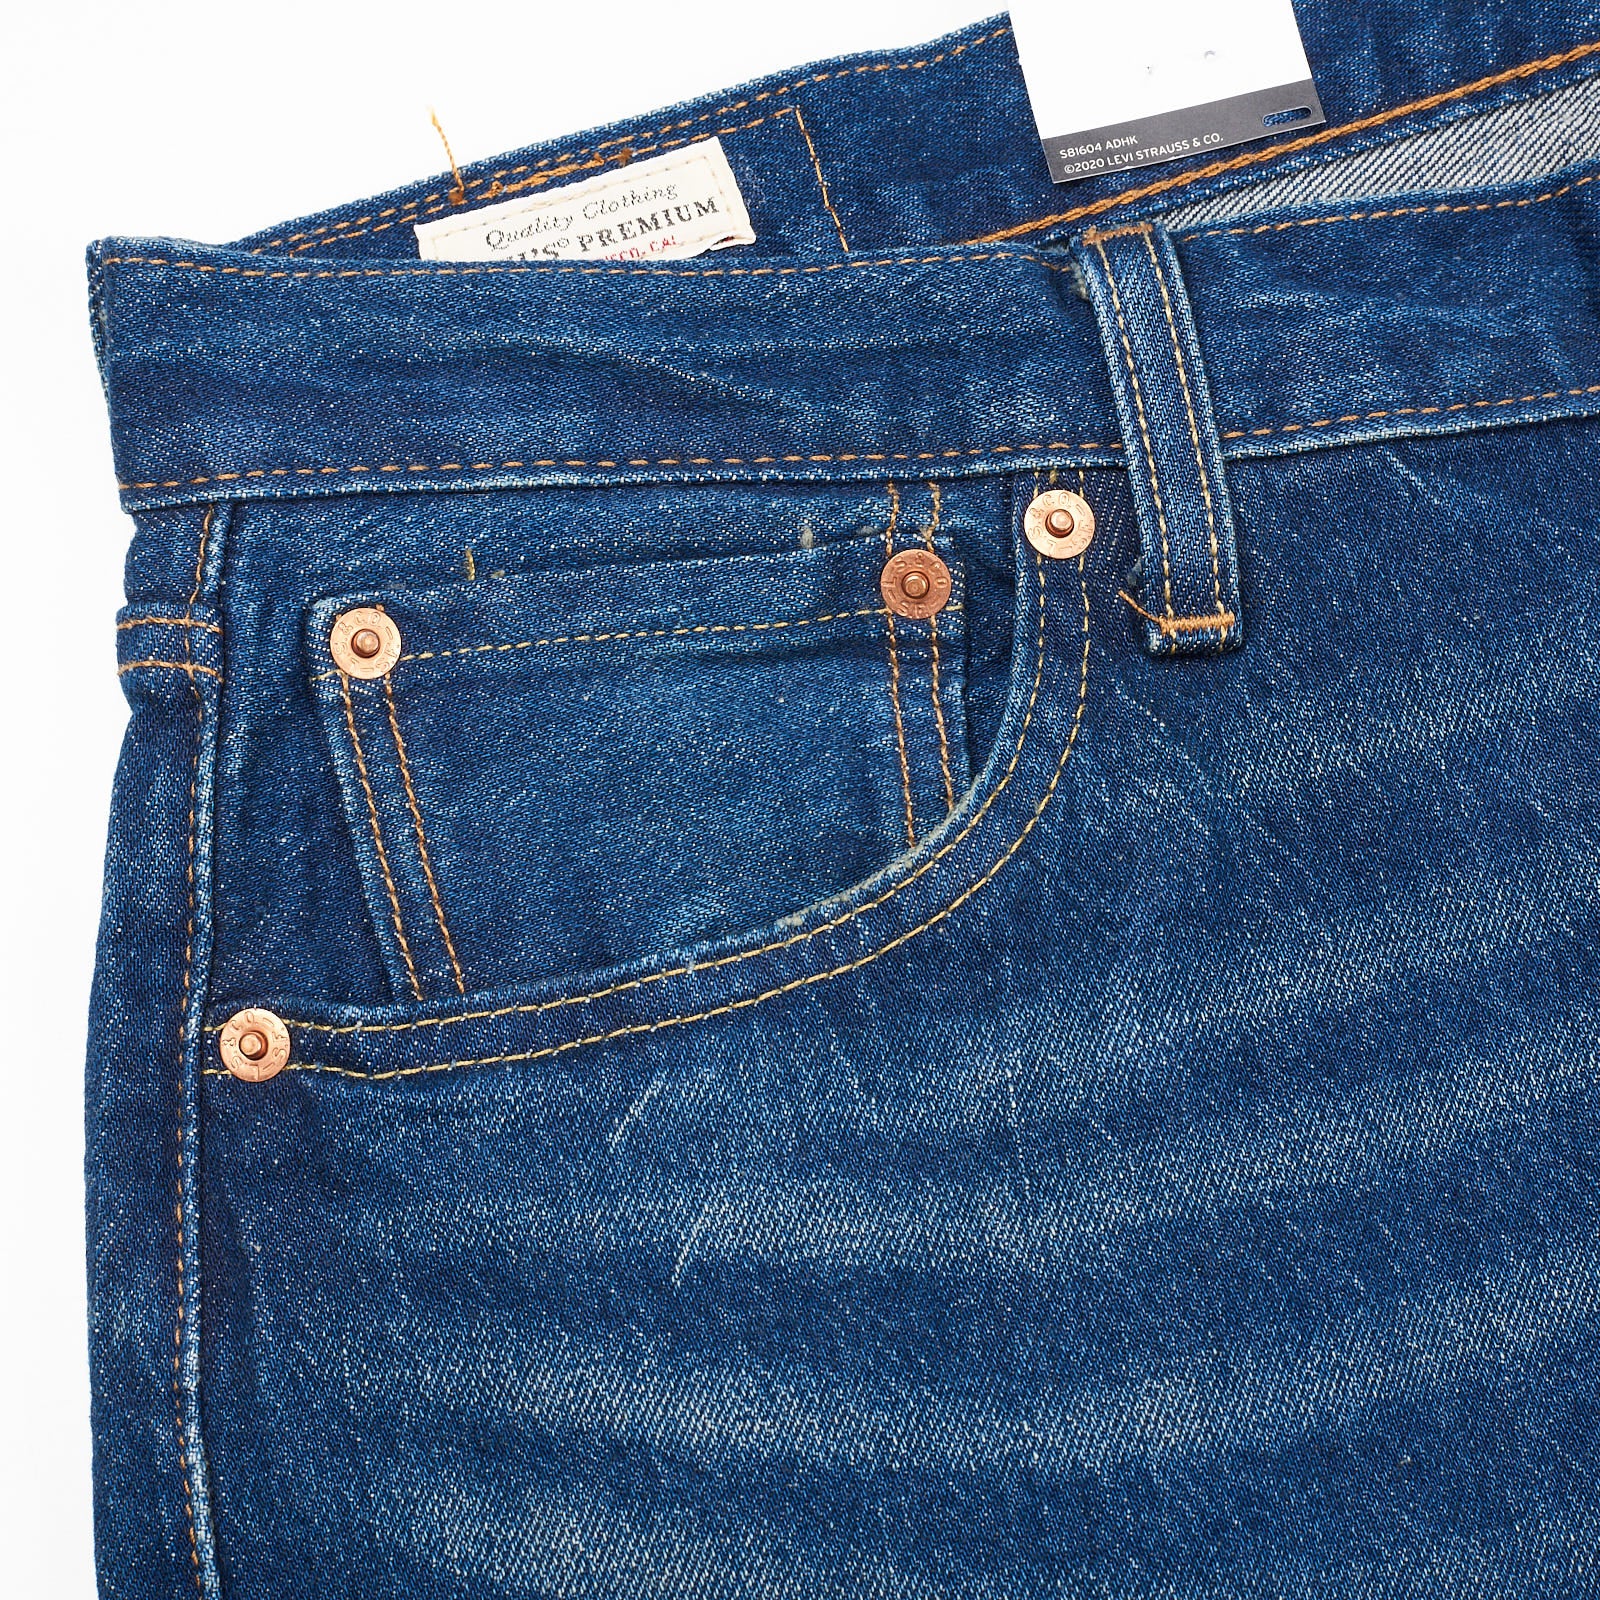 LEVI'S Premium 501 Blue Stretch Big E Denim Straight Fit Jeans Pants NEW W34 L30 LEVI'S